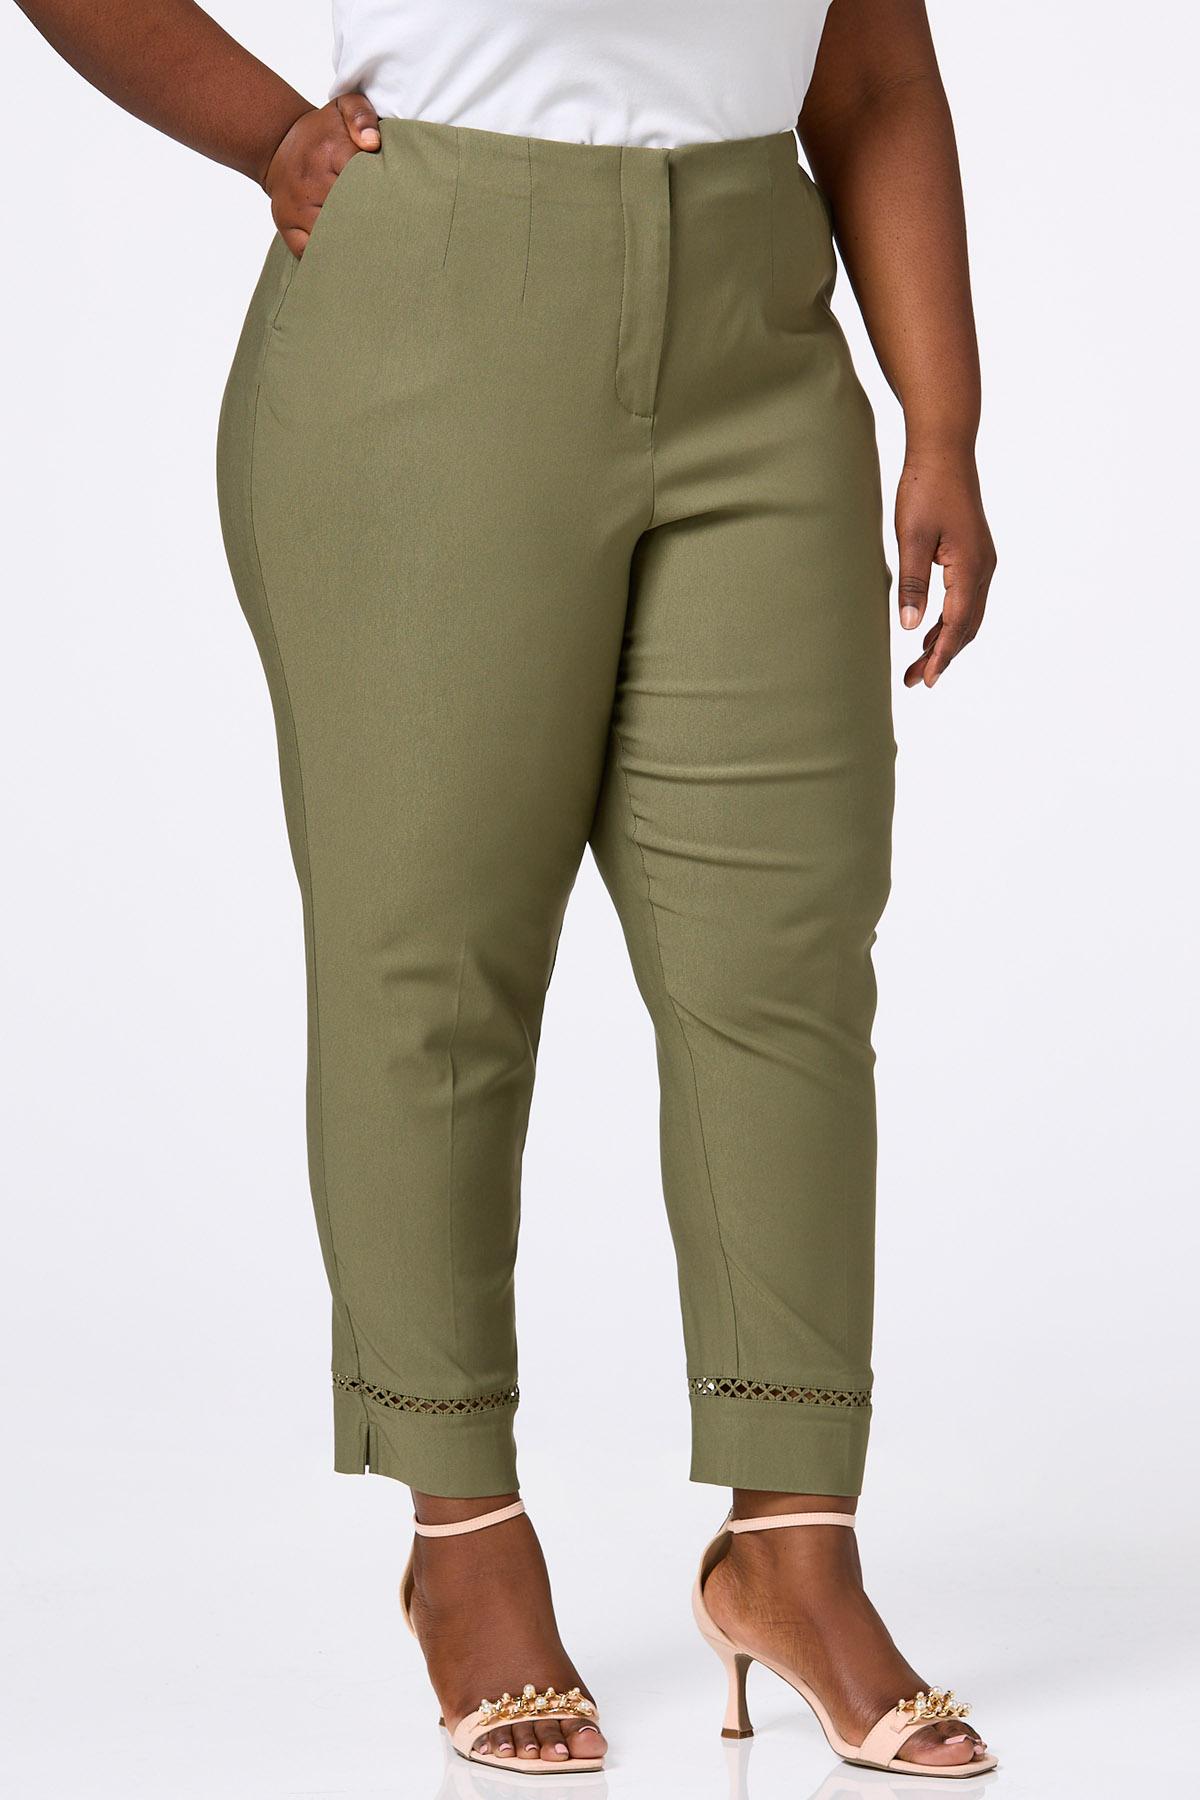 CATO Women's J/M Petite Slim Bengaline Pants - Olive, 6P